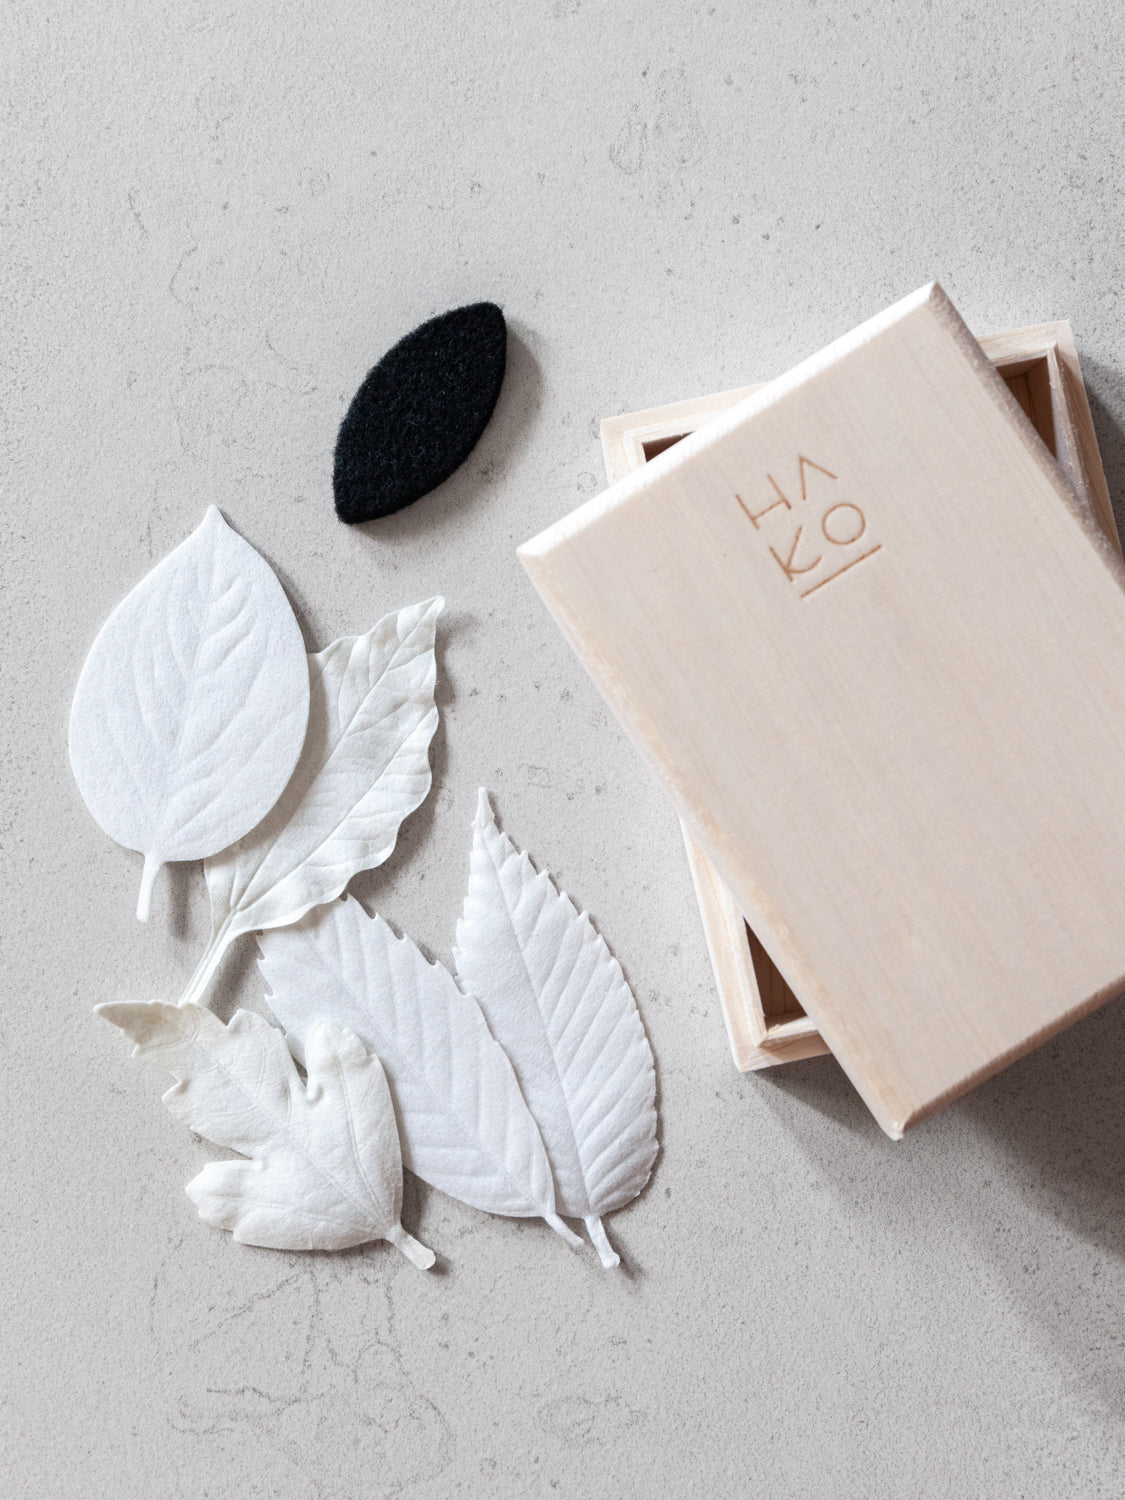 HA KO Paper Incense - Wooden Box Set of 5 With Incense Mat